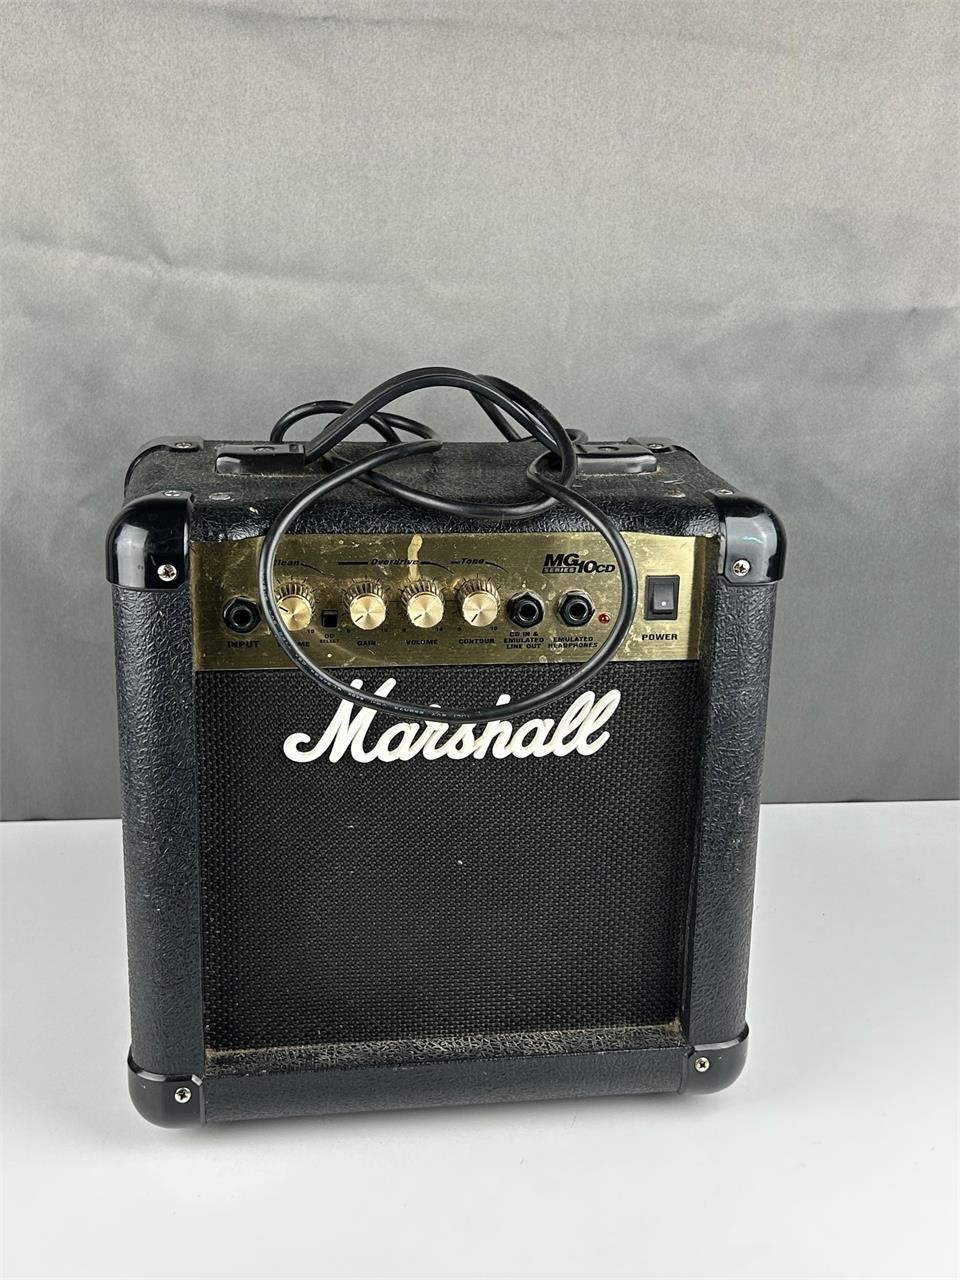 Small Marshall speaker amp